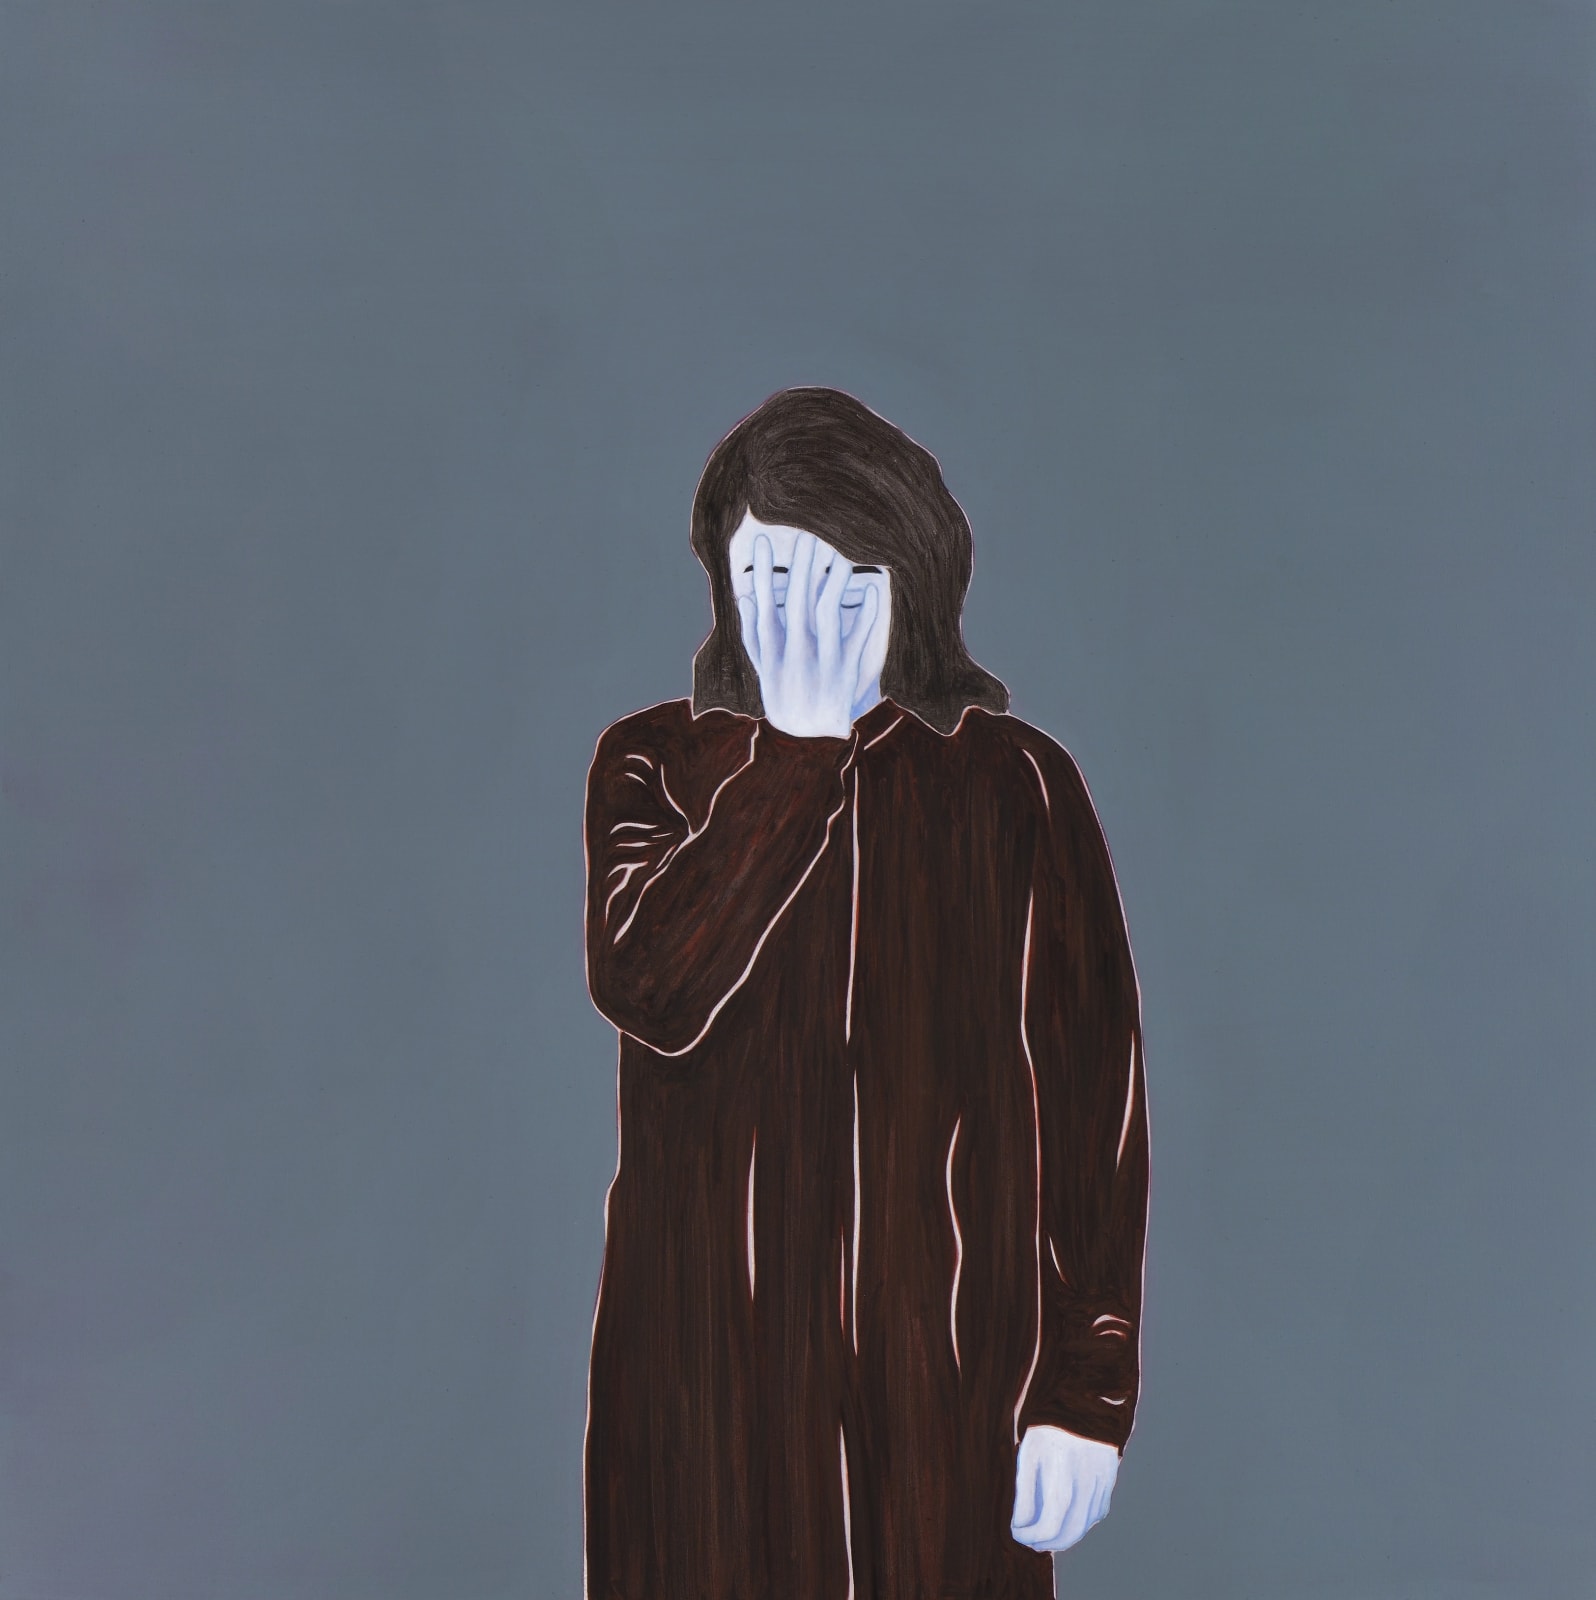 Djamel Tatah (b. 1959), Untitled, 2015